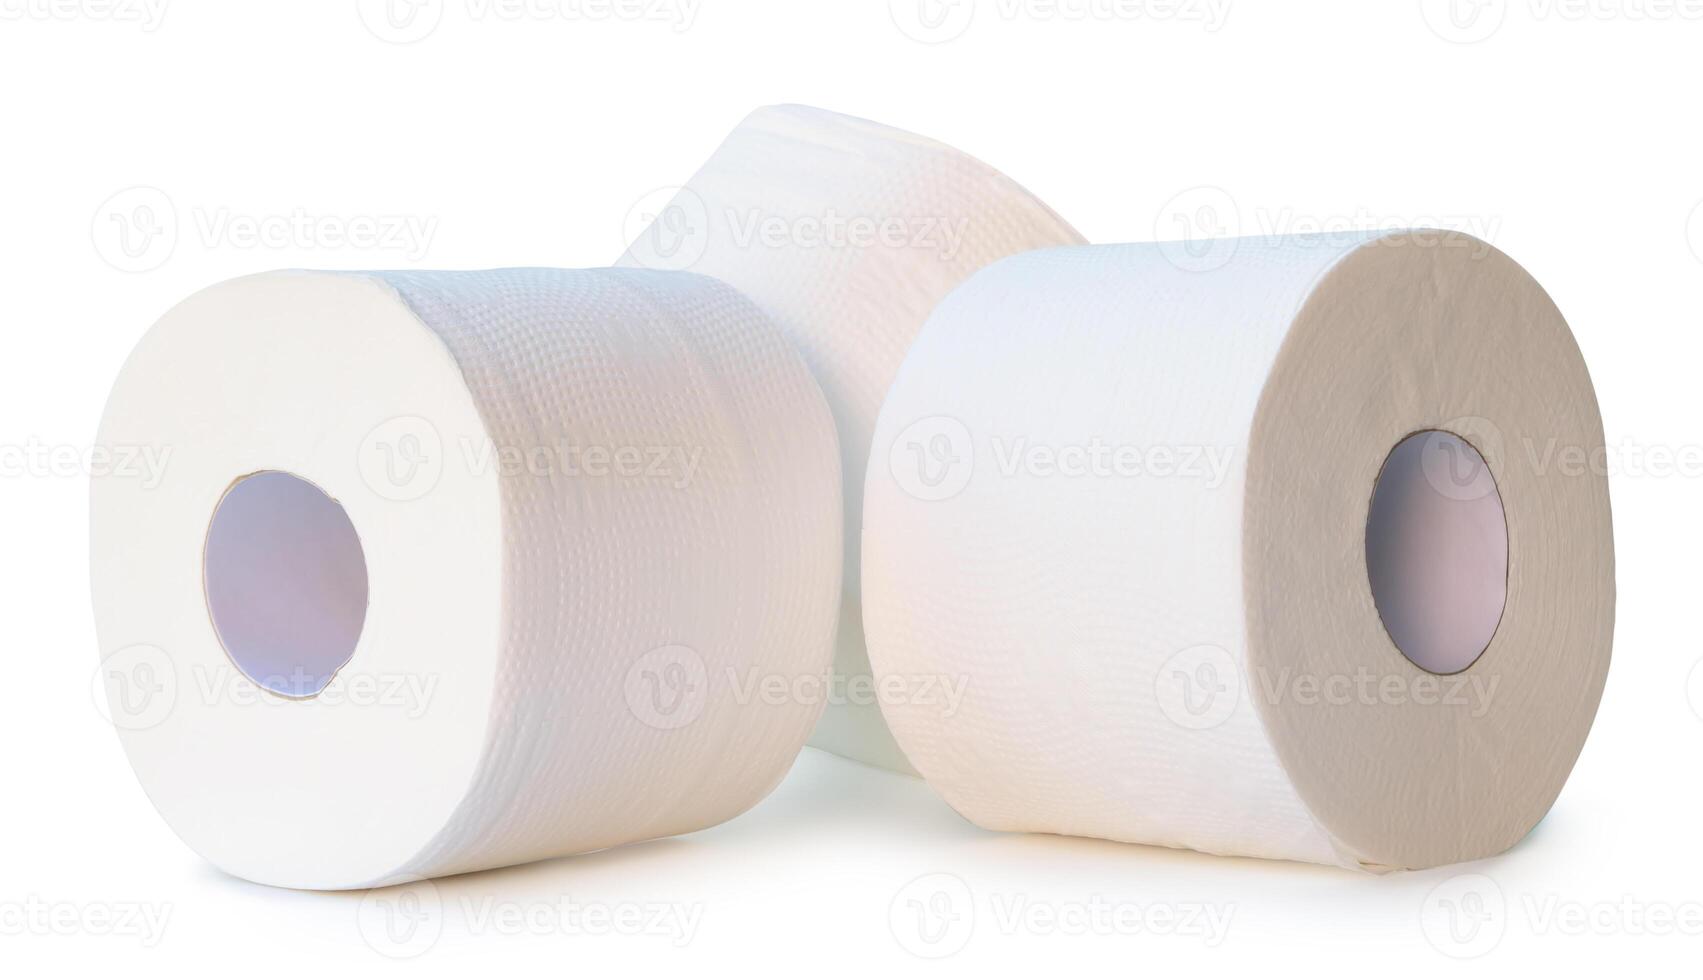 voorkant visie van wit zakdoek papier of toilet papier broodjes in stack geïsoleerd Aan wit achtergrond met knipsel pad foto